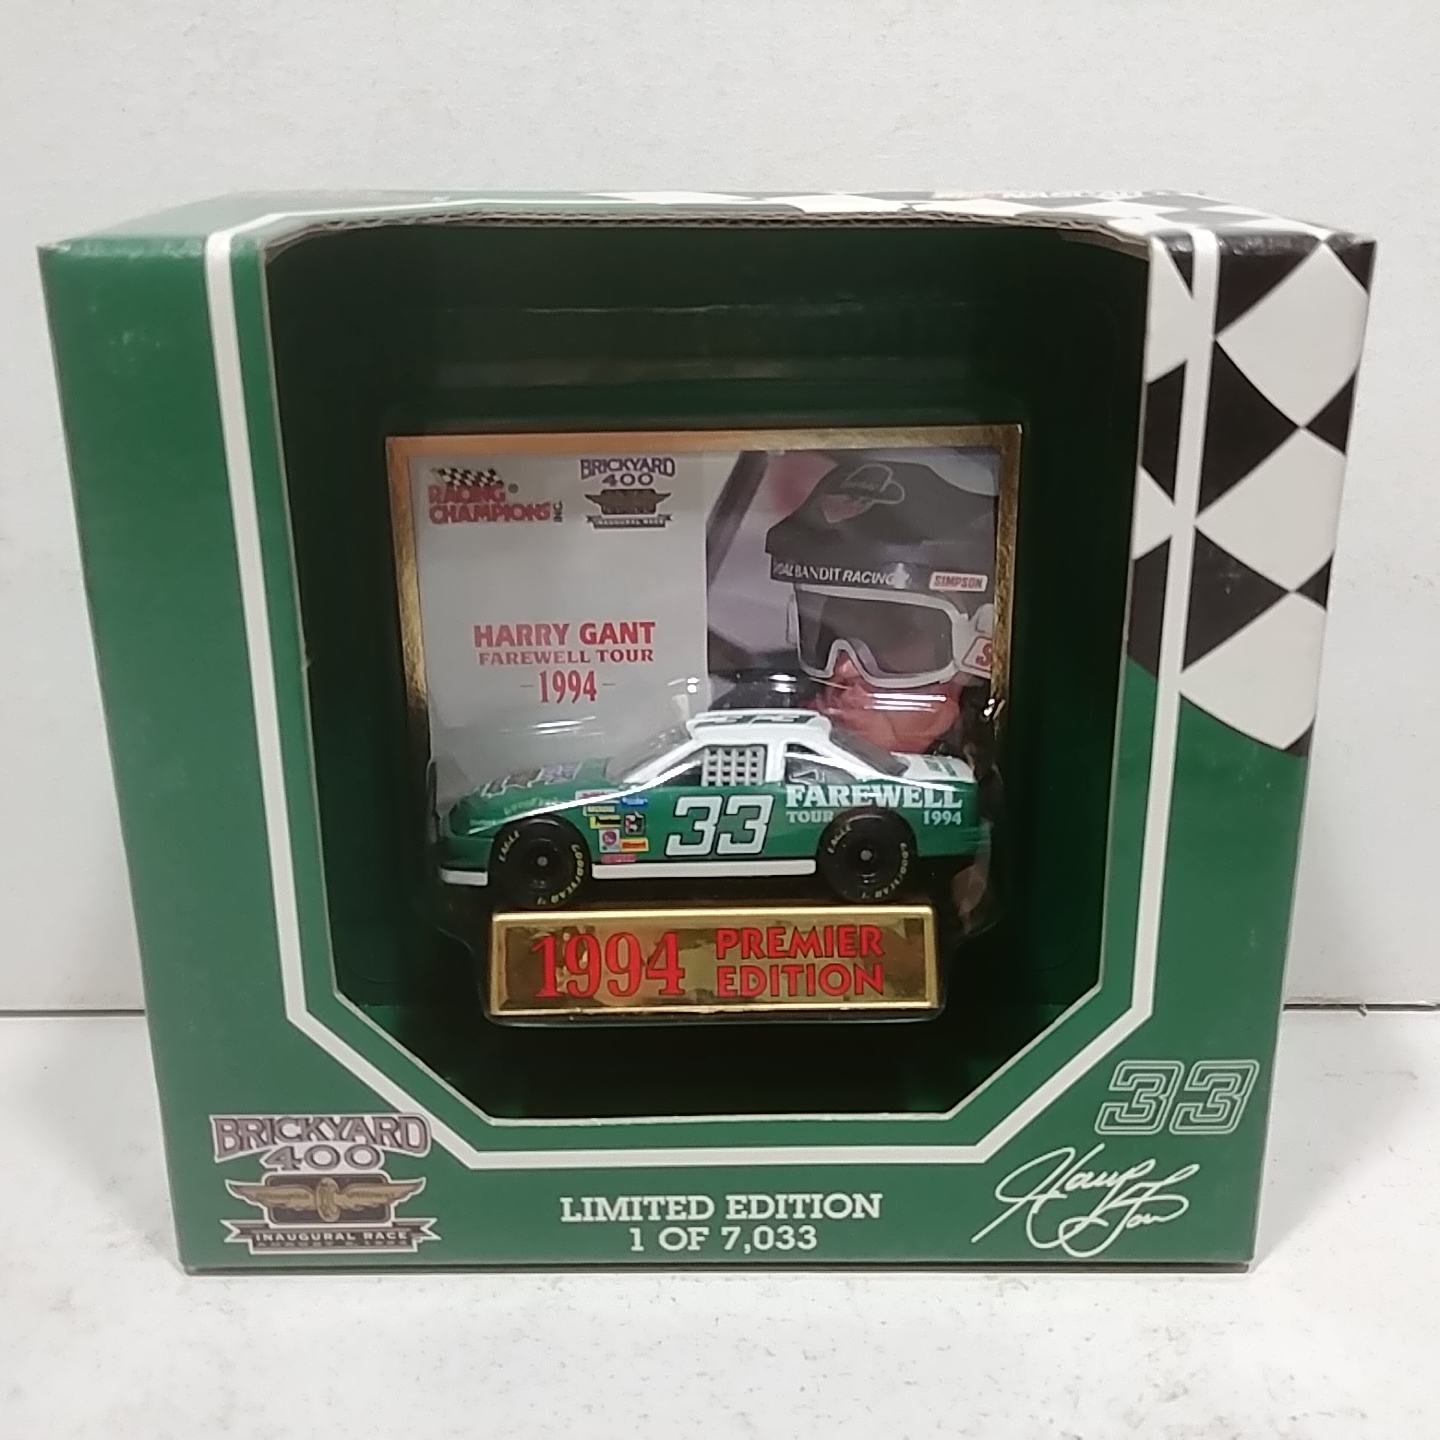 1994 Harry Gant 1/64th Racing Champions "Farewell Tour" Brickyard car